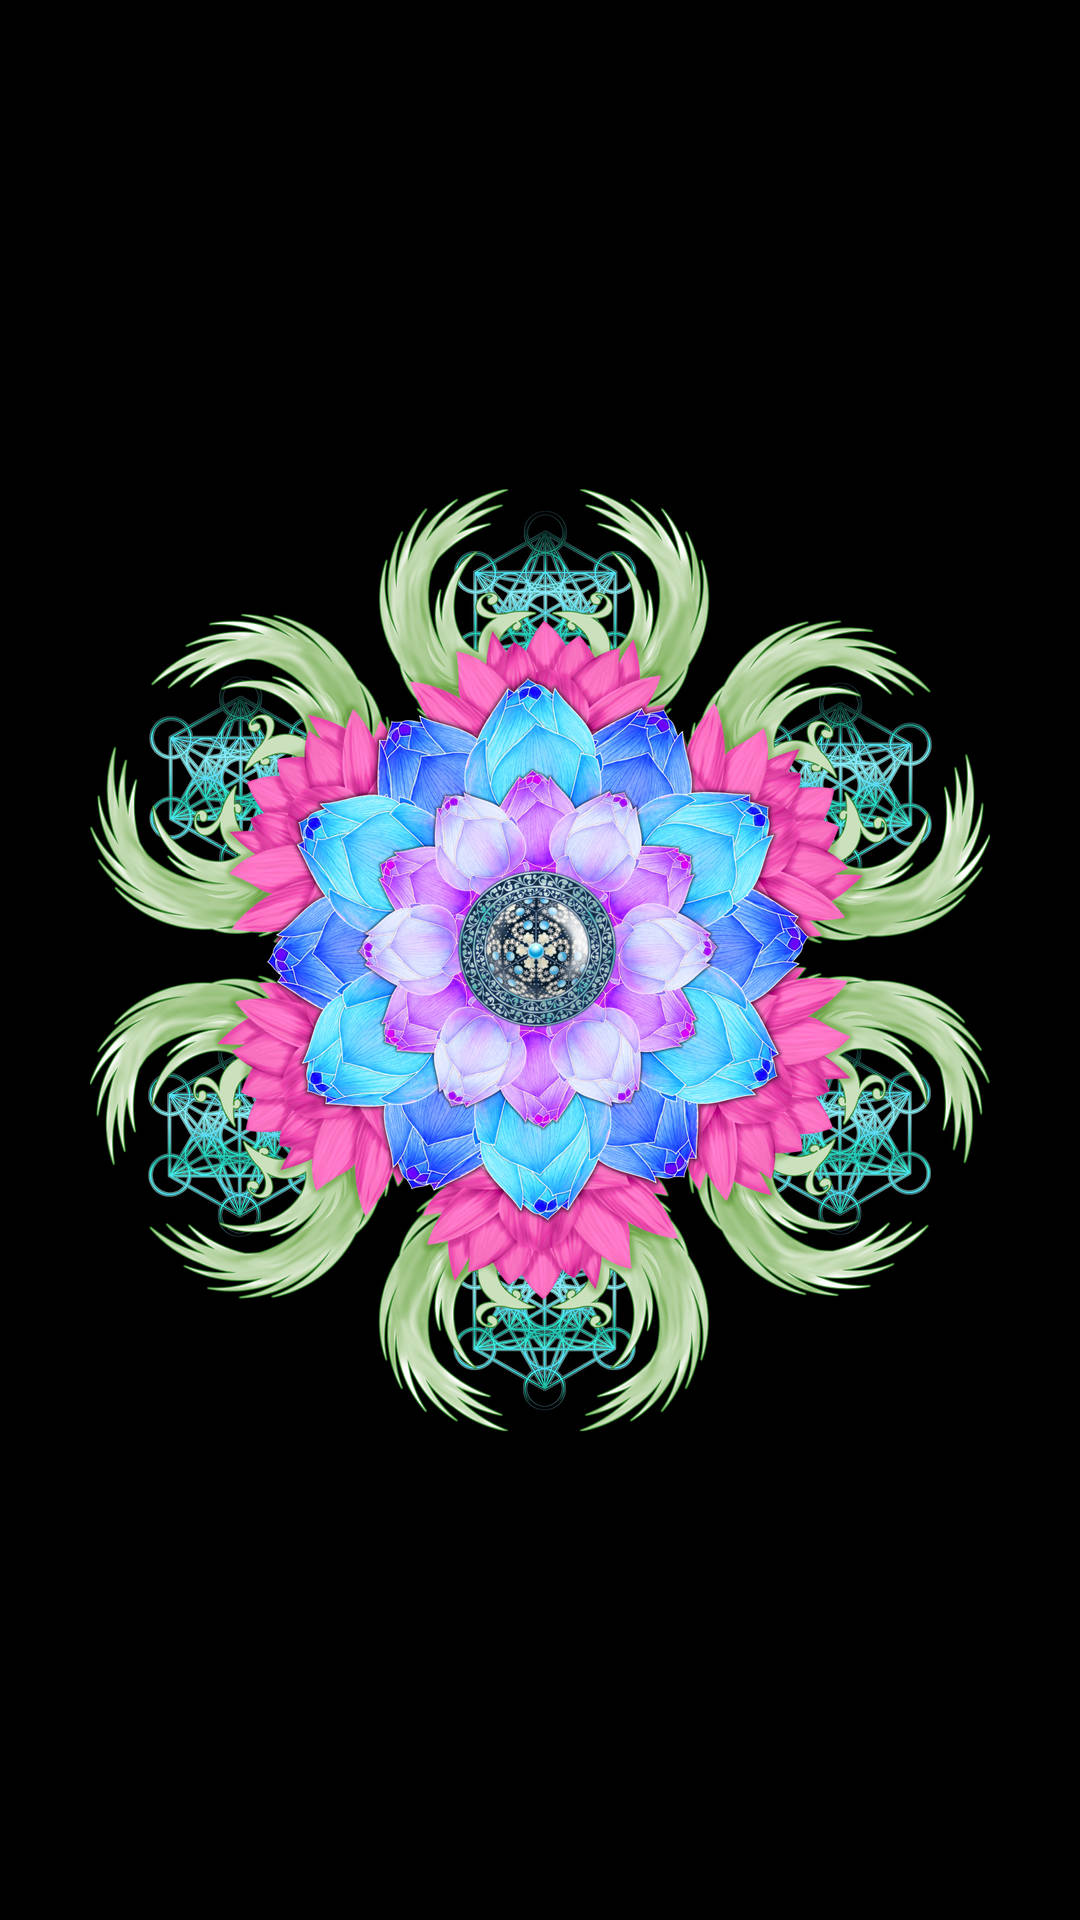 Mandala 3240X5760 Wallpaper and Background Image